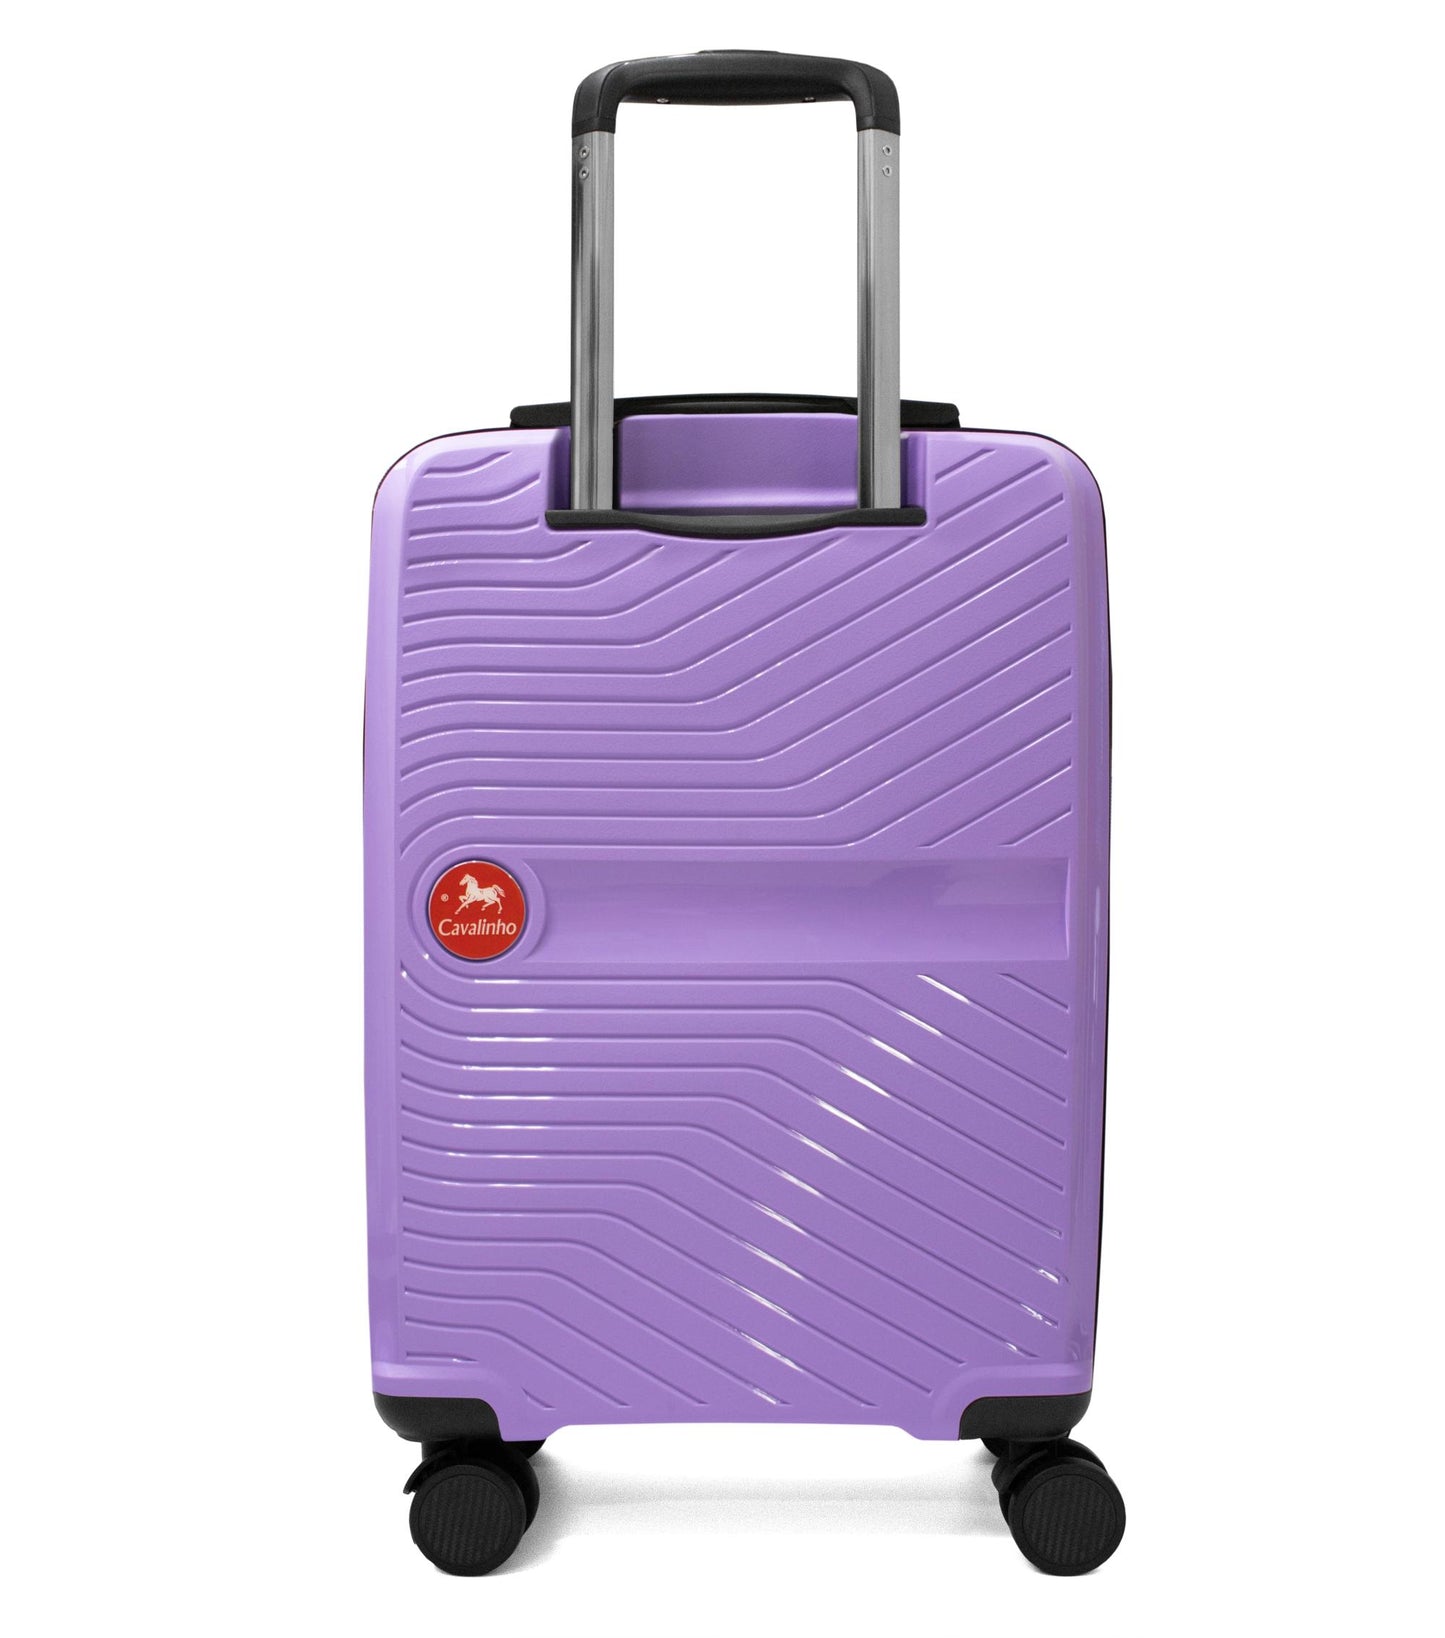 Cavalinho Colorful Carry-on Hardside Luggage (19") - 19 inch Lilac - 68020004.39.19_3